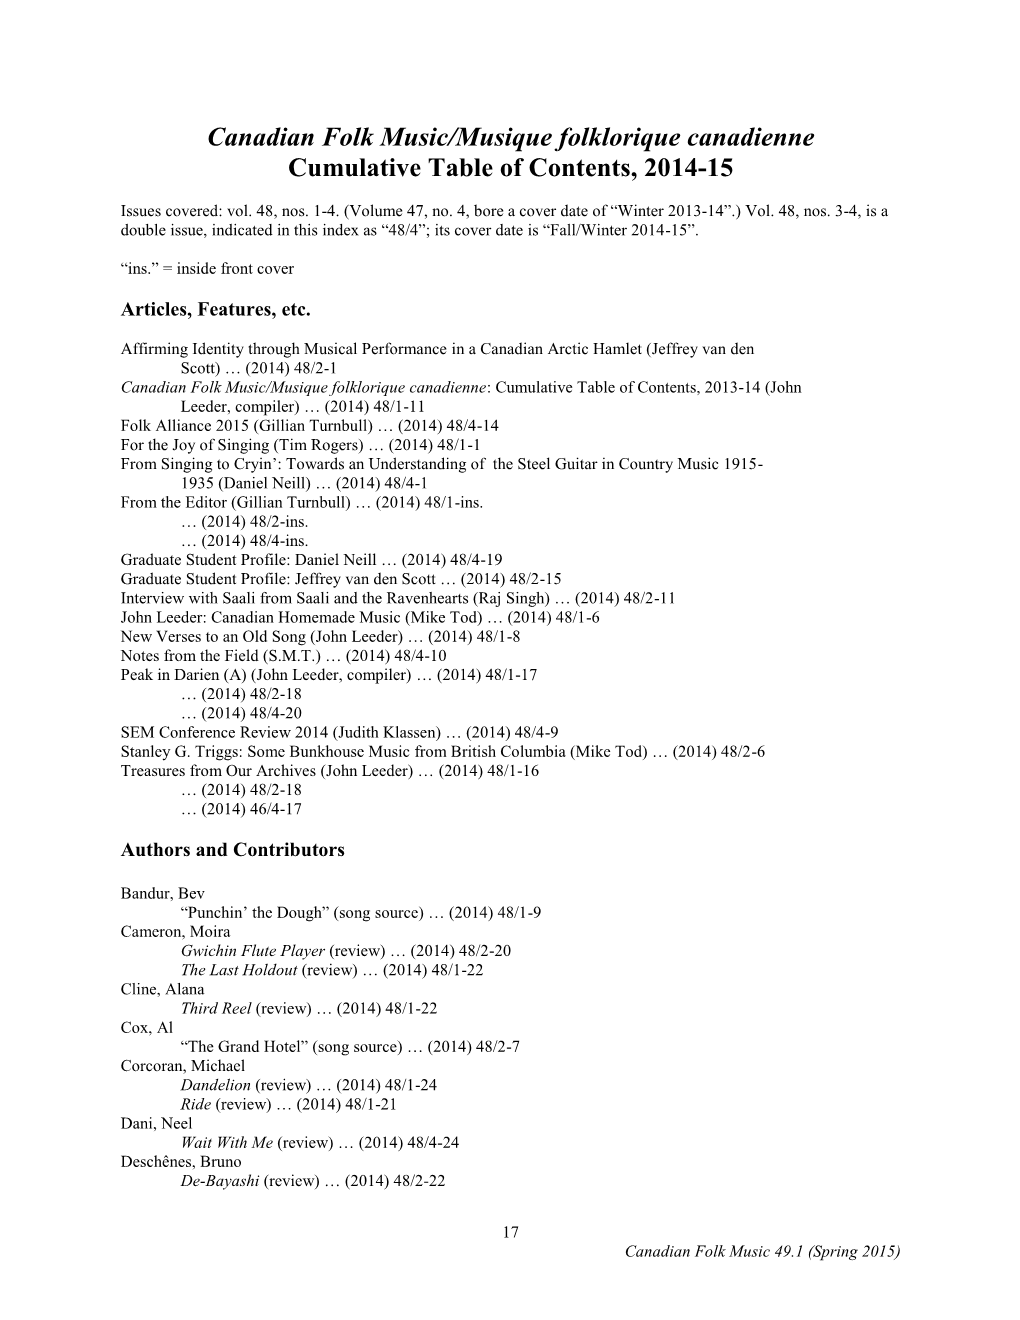 Canadian Folk Music/Musique Folklorique Canadienne Cumulative Table of Contents, 2014-15